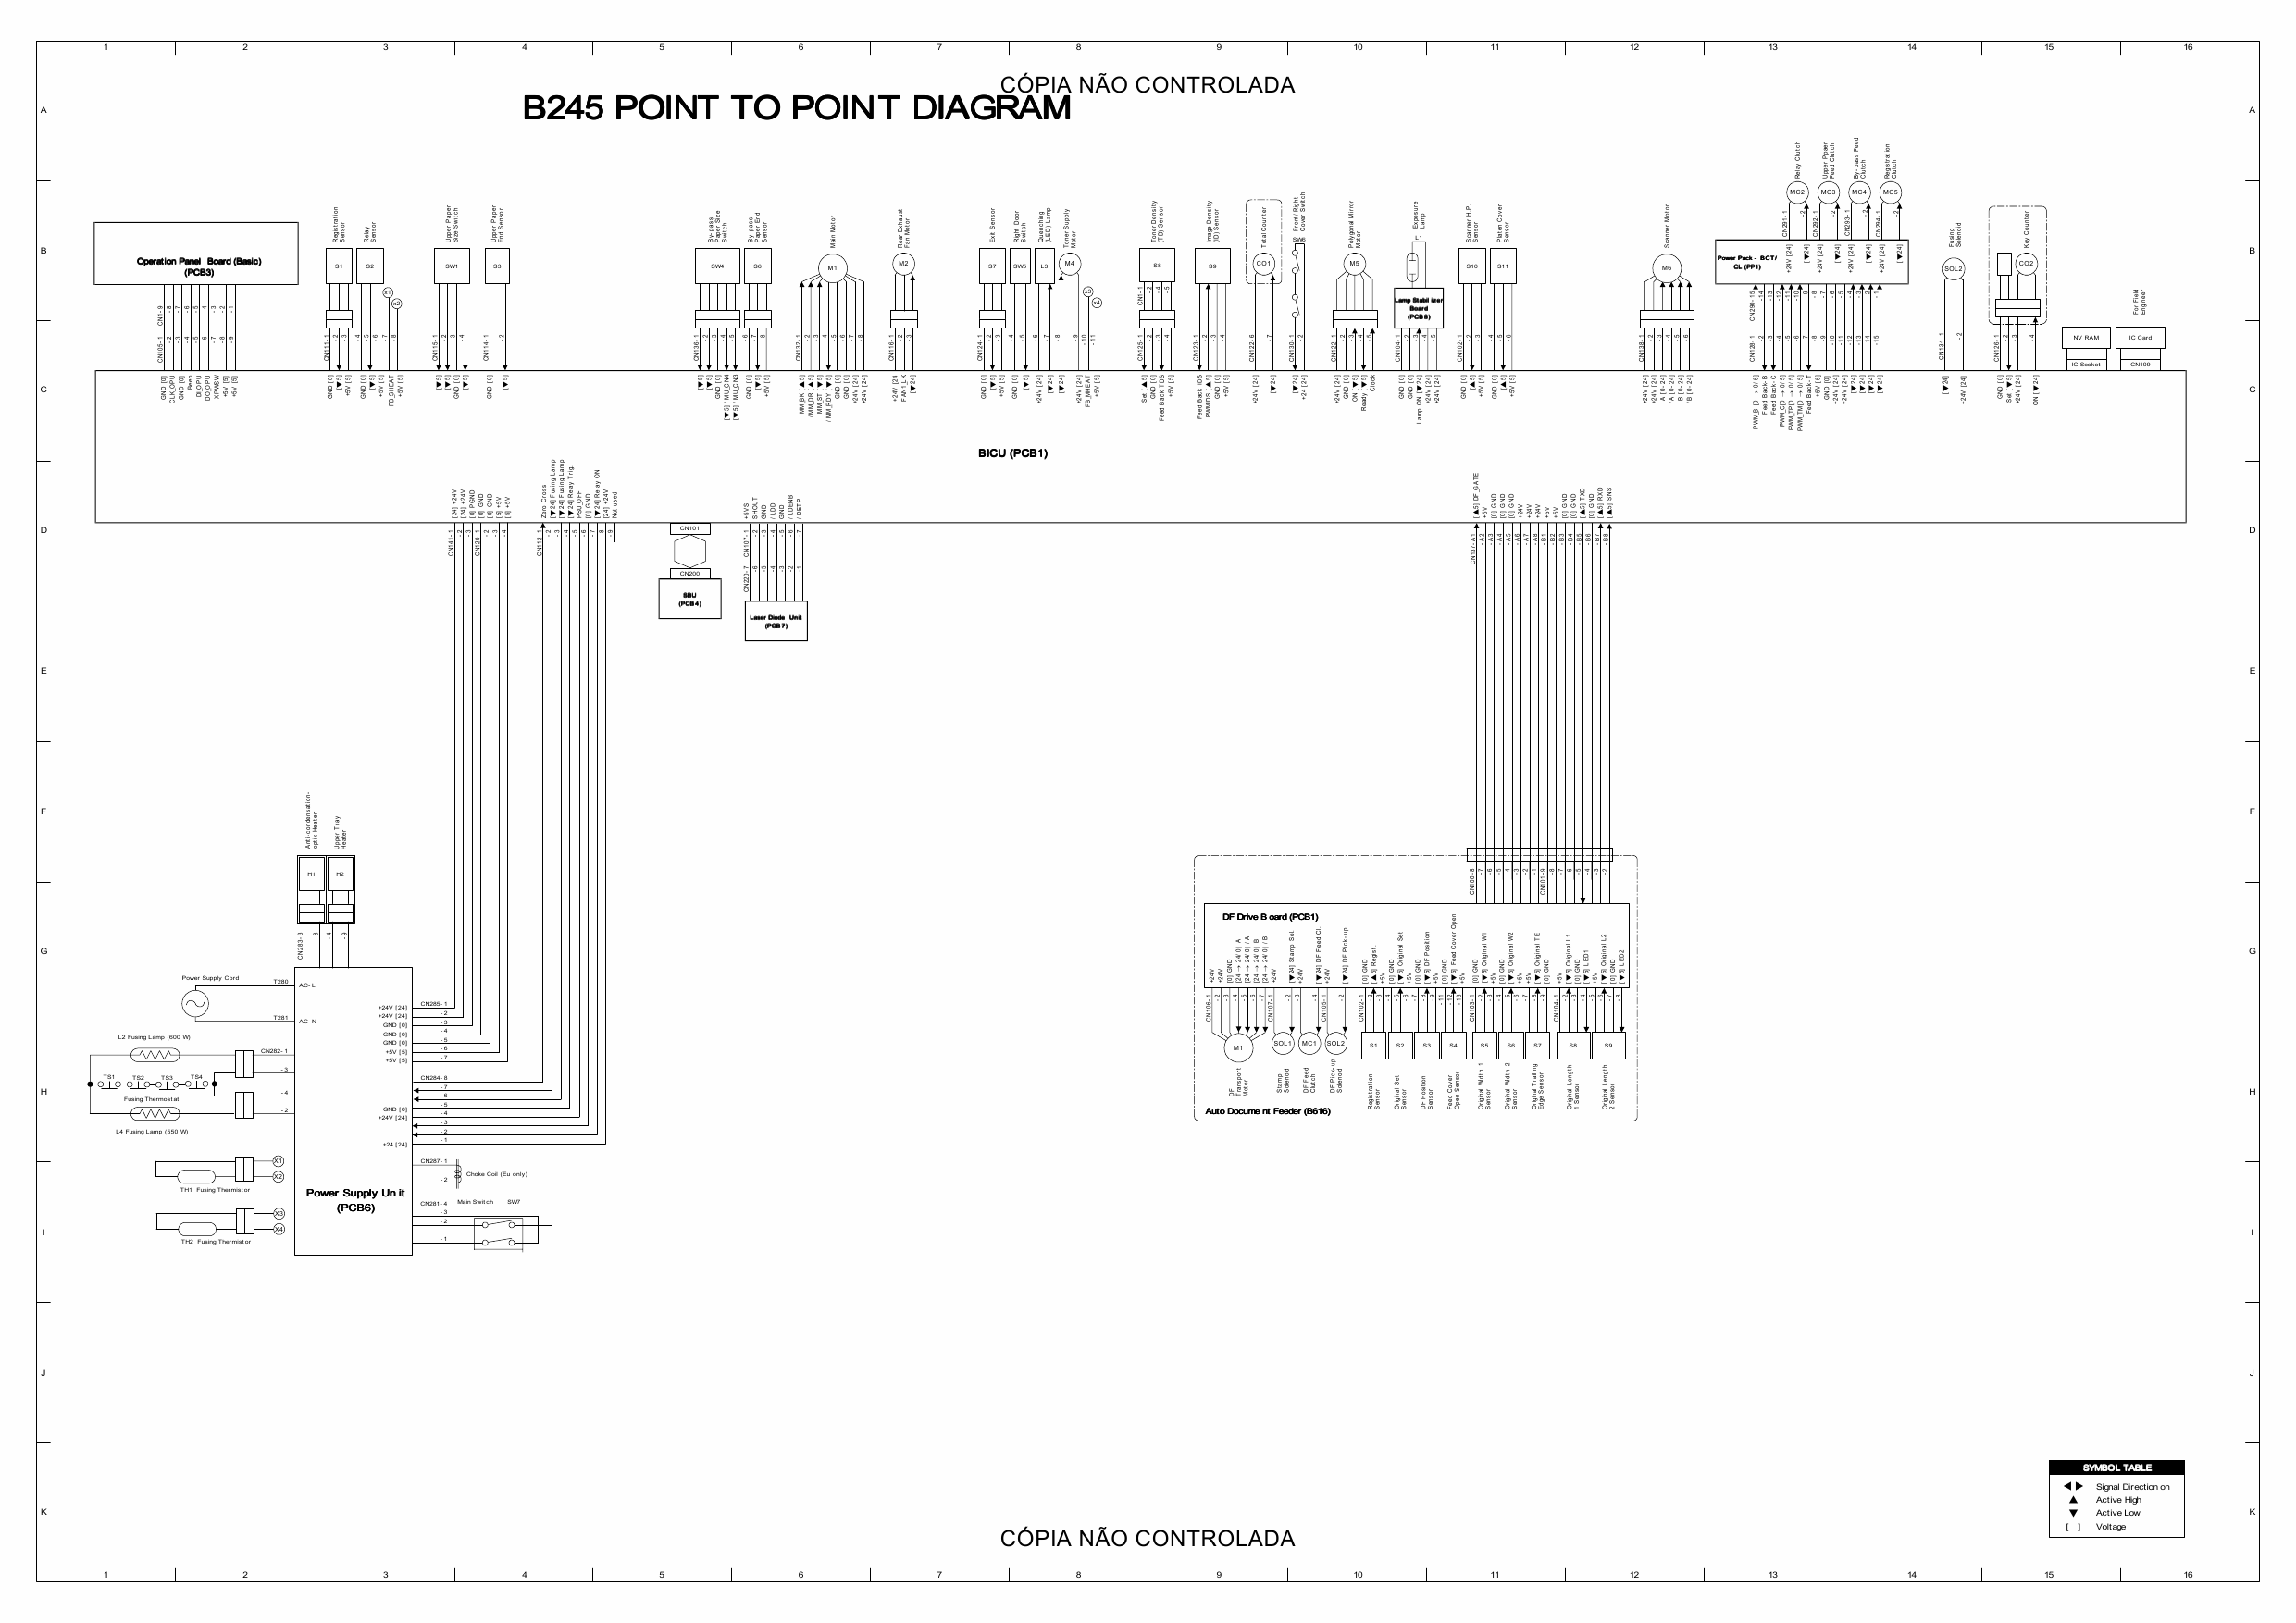 RICOH Aficio MP-1500 B245 Circuit Diagram-1